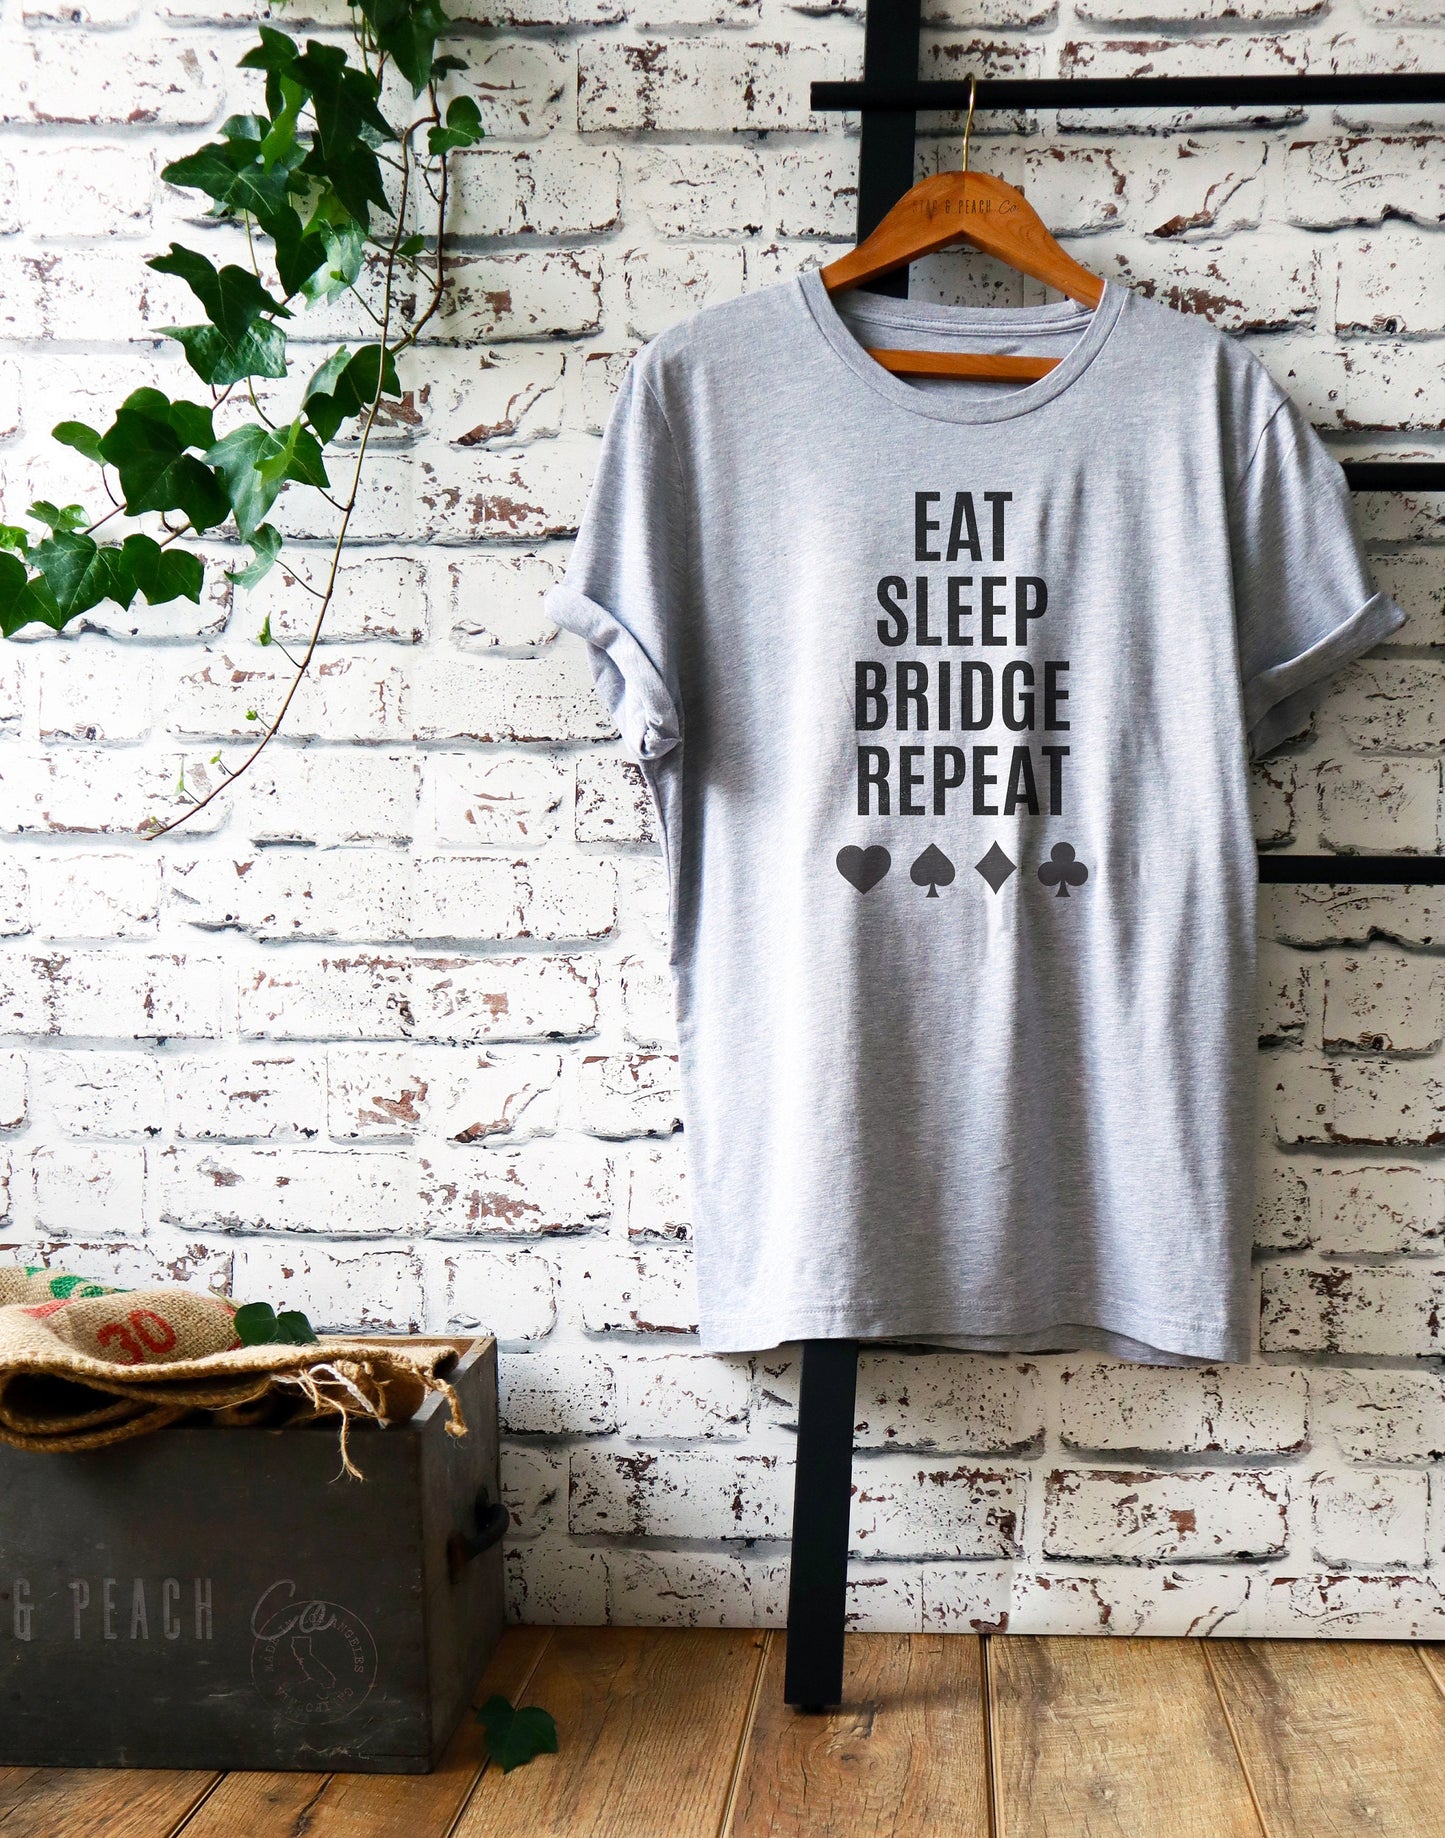 Bridge Player Shirt/Tank Top /Hoodie - Bridge Shirt, Bridge Player Gift, Funny Bridge Gift, Bridge Lover Shirt, Eat Sleep Bridge Repeat